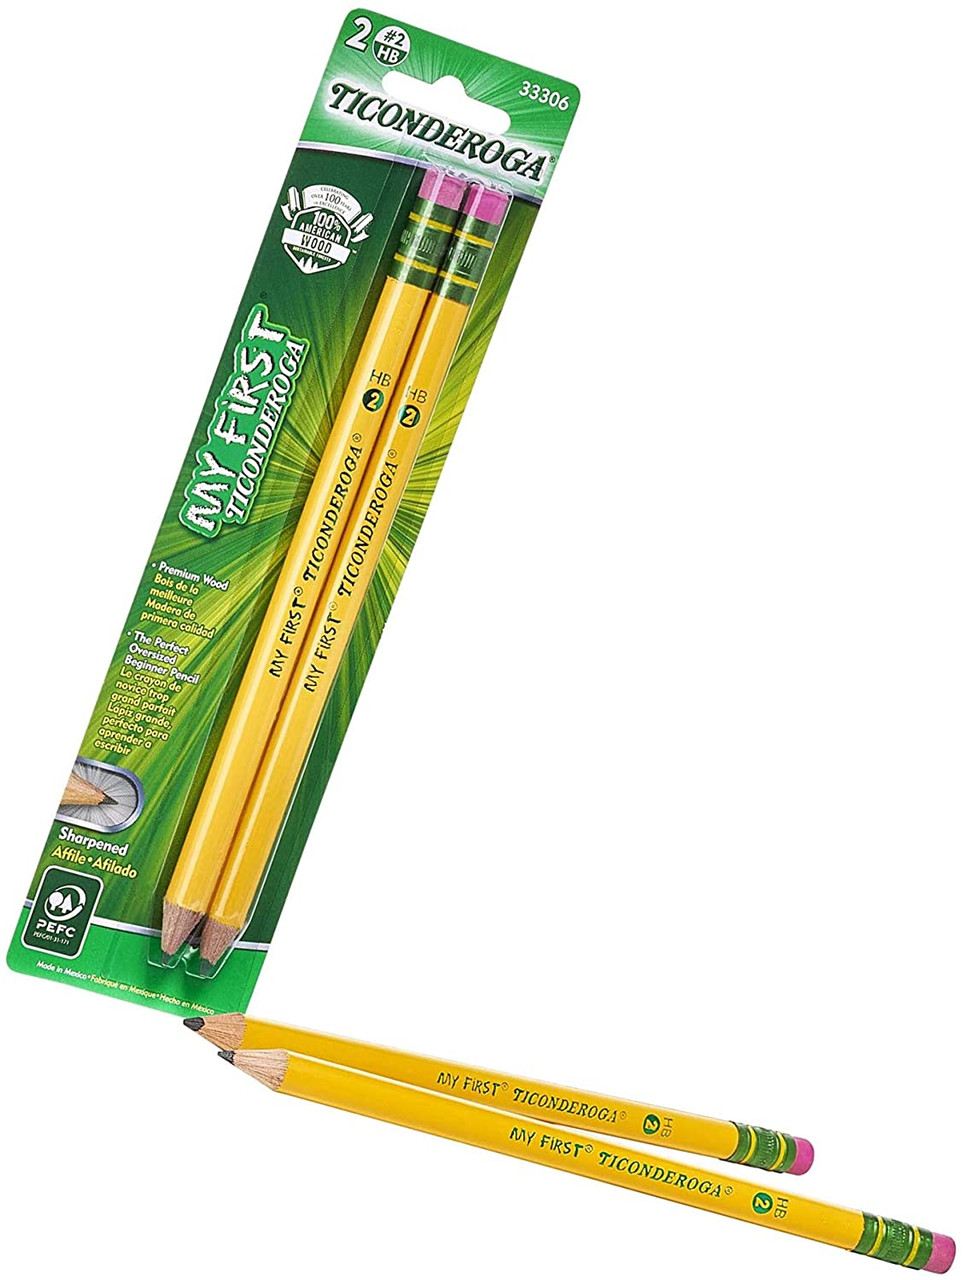 Ticonderoga Beginners Oversized Pencils With Latex-free Eraser, No